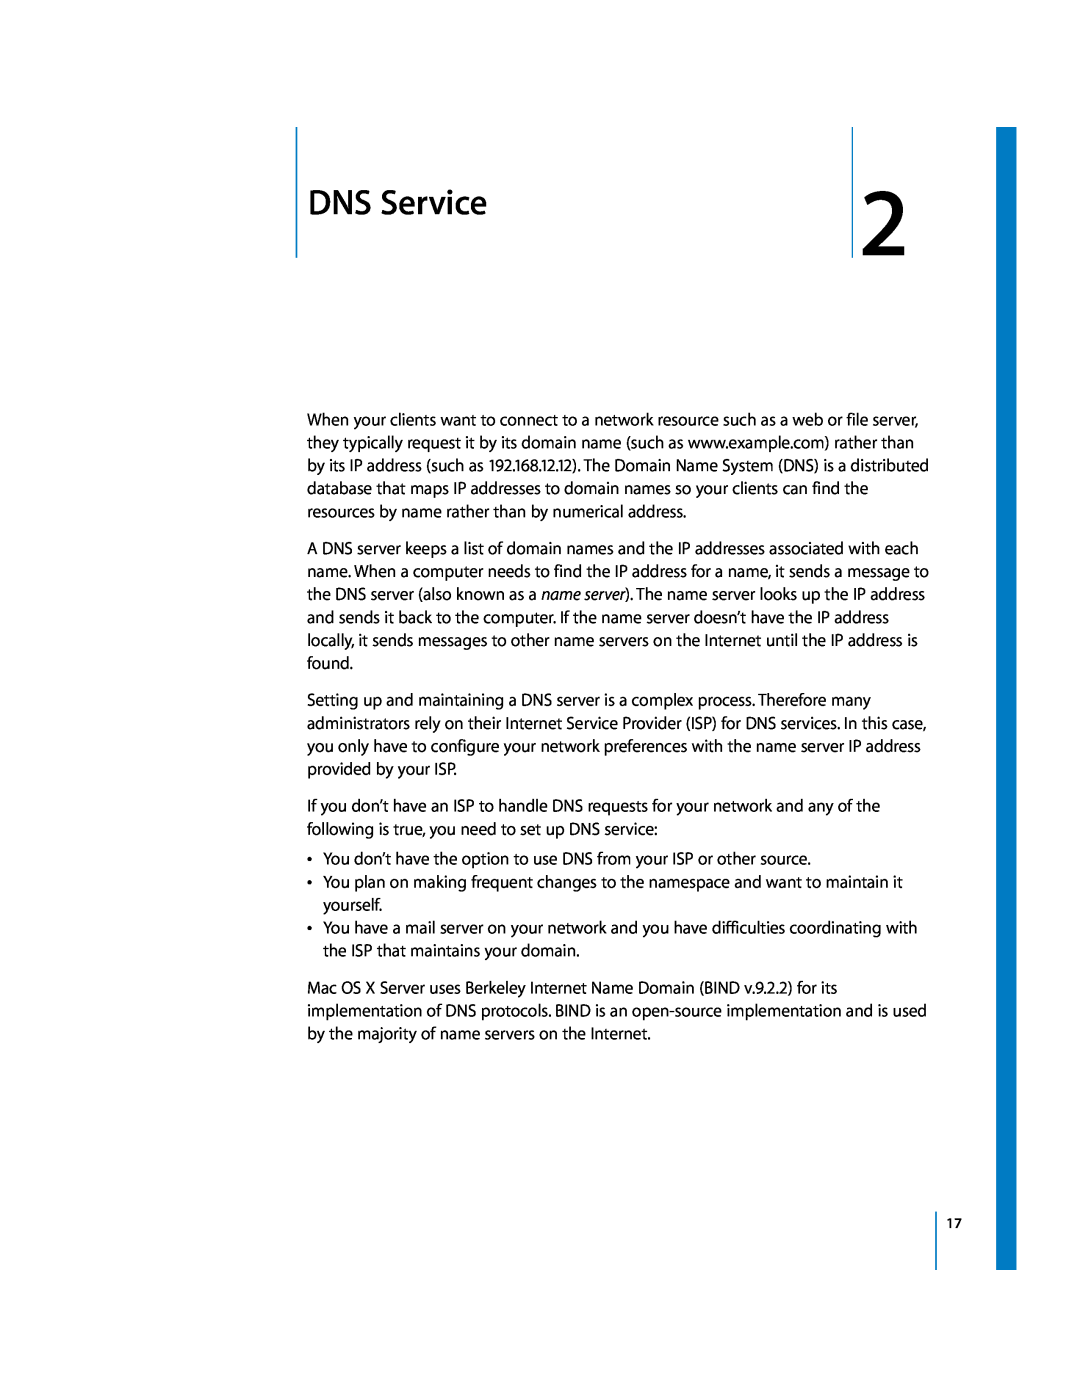 Apple 034-2351_Cvr manual DNS Service 